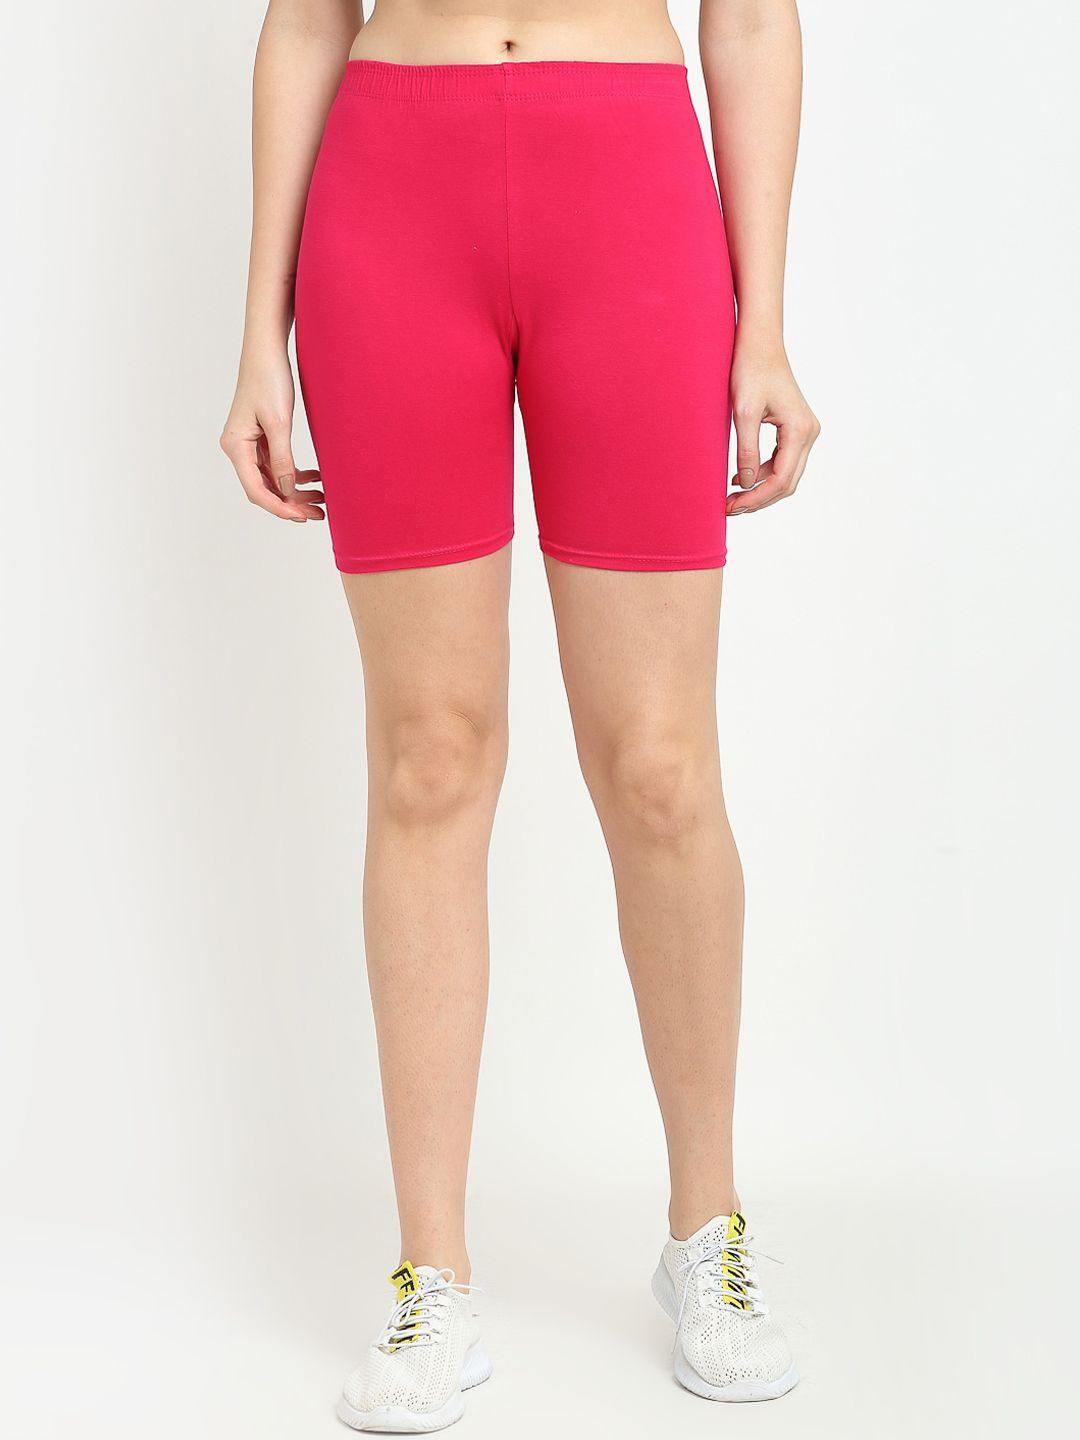 gracit-women-pink-sports-shorts